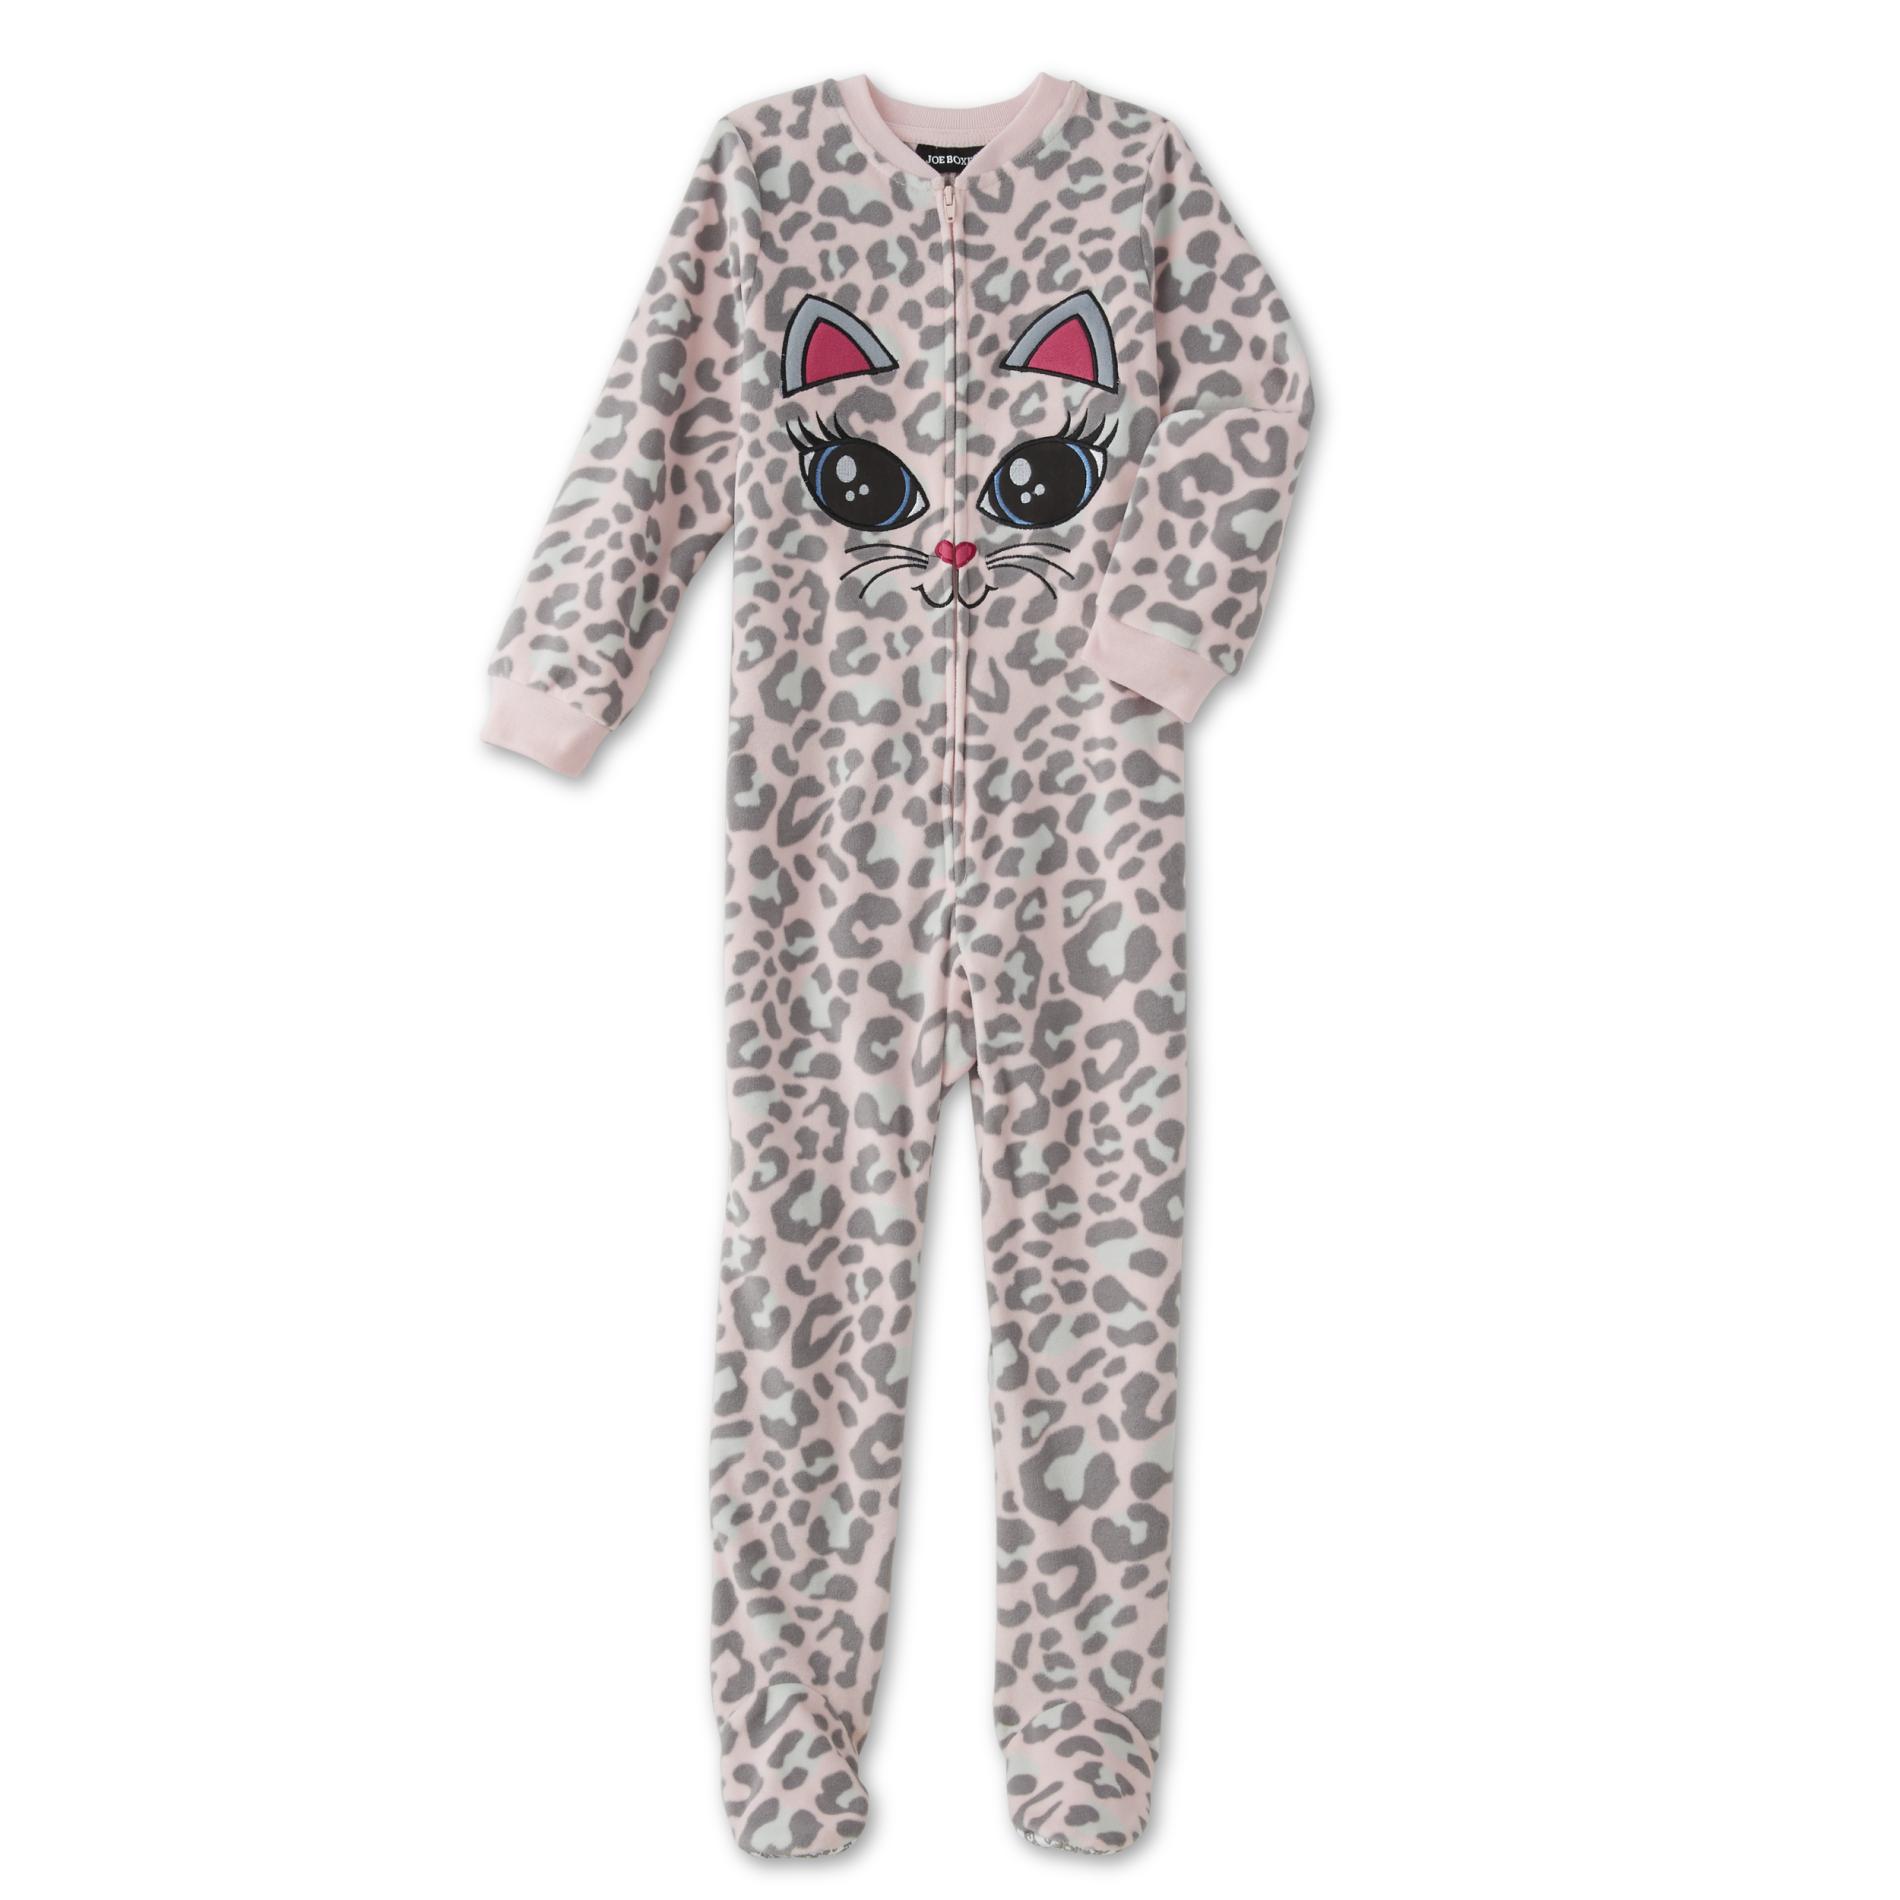 Joe Boxer Girls' Footed Fleece Pajamas - Leopard Print